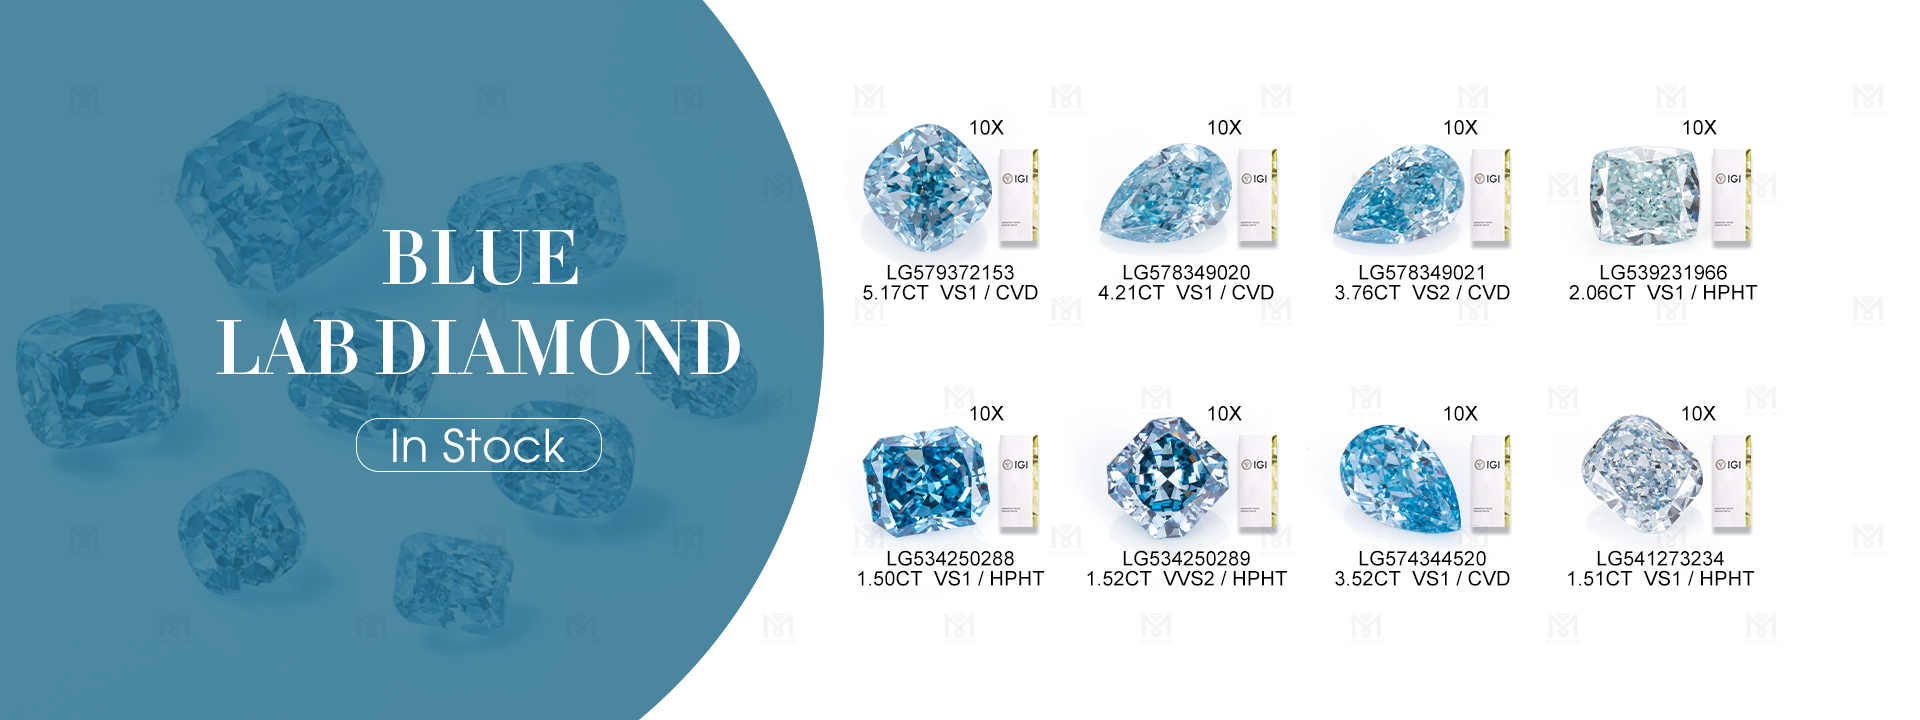 blue lab diamond onsale